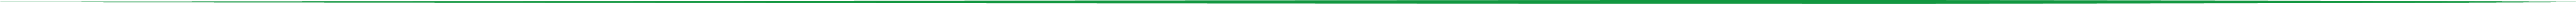 linea verde